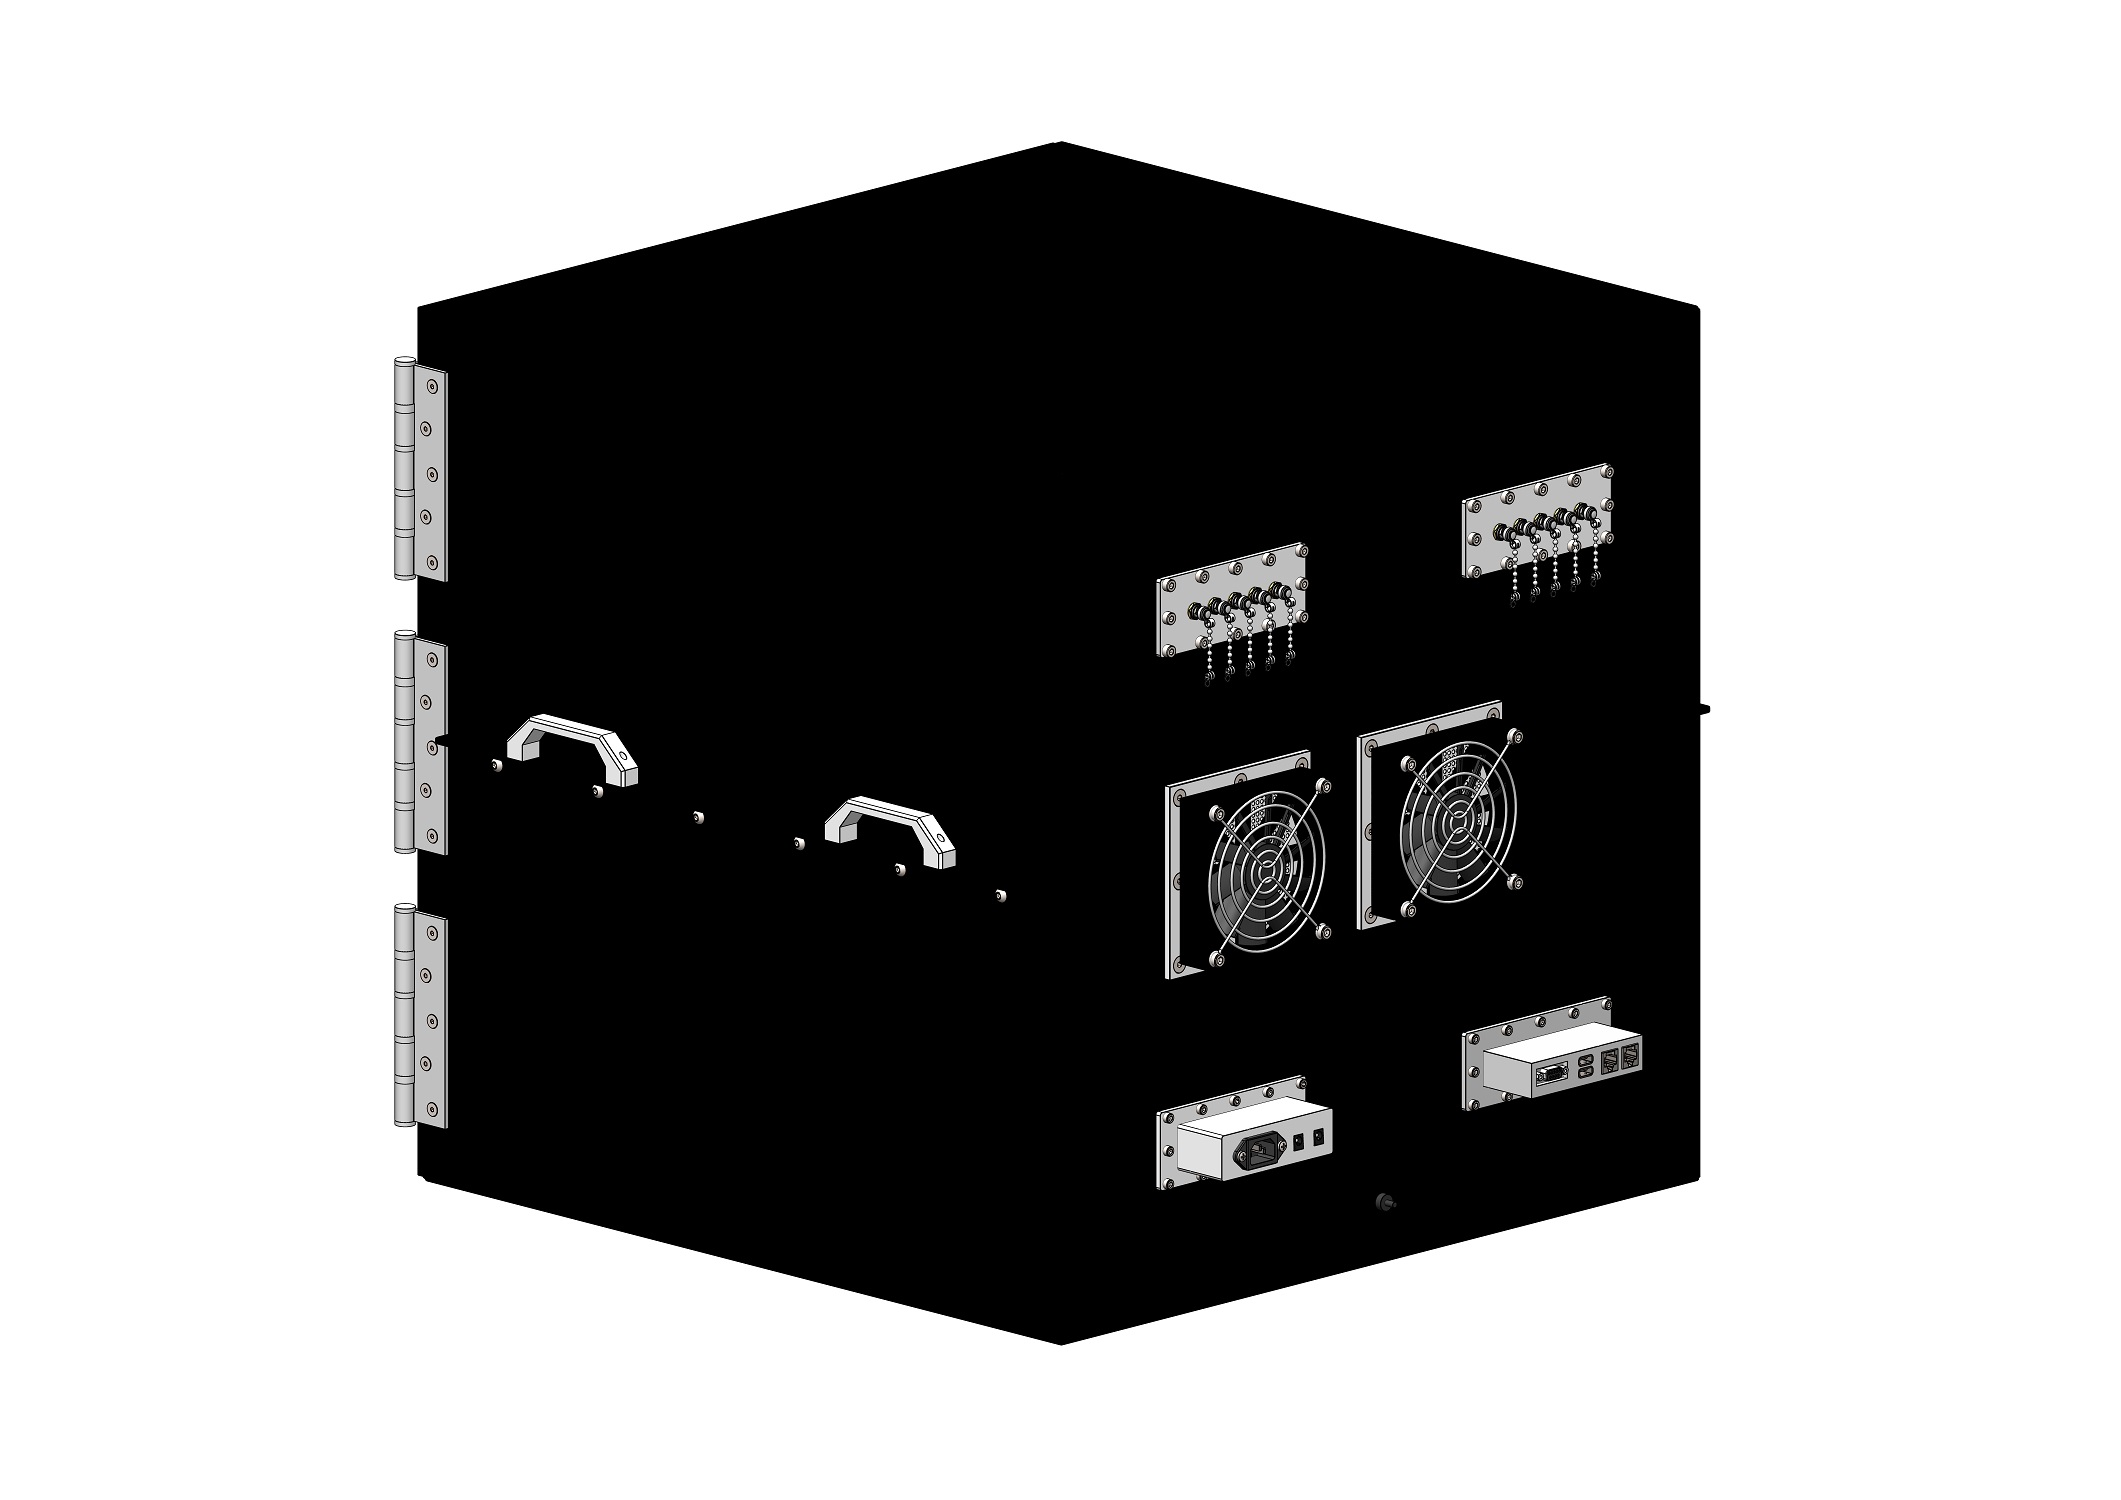 HDRF-2570-Q RF Shield Test Box